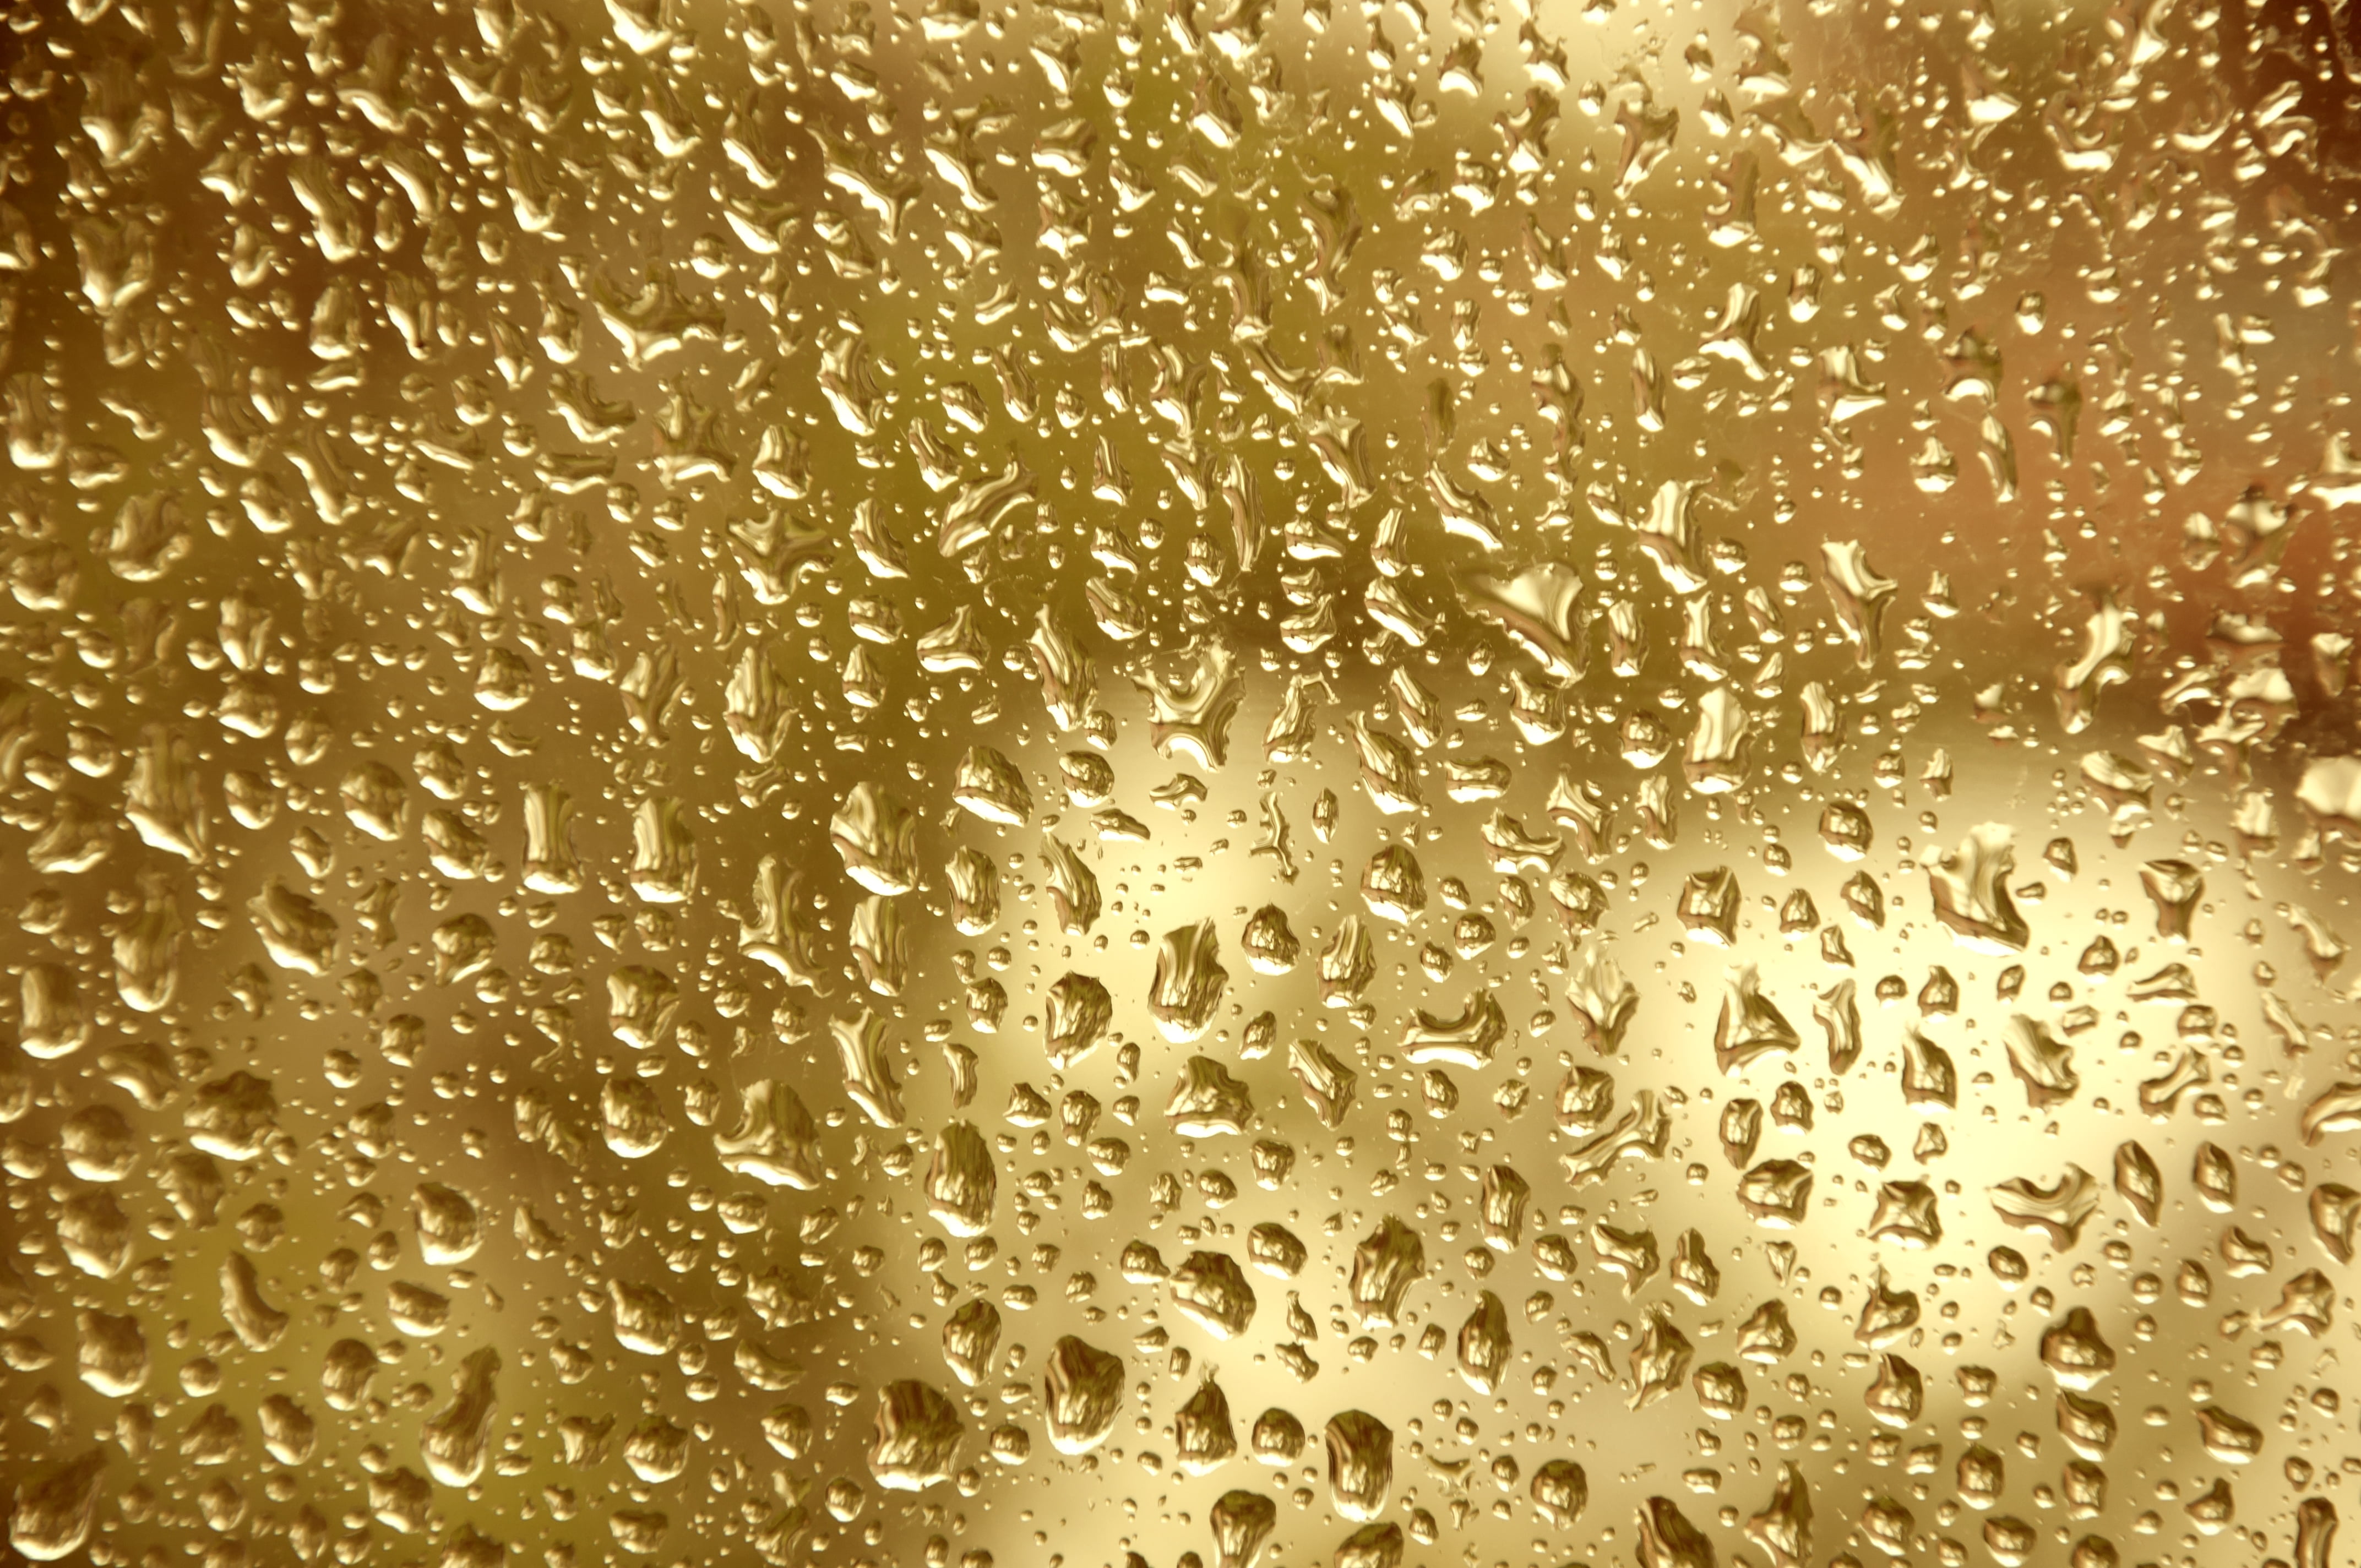 photo of rain drops on glass window